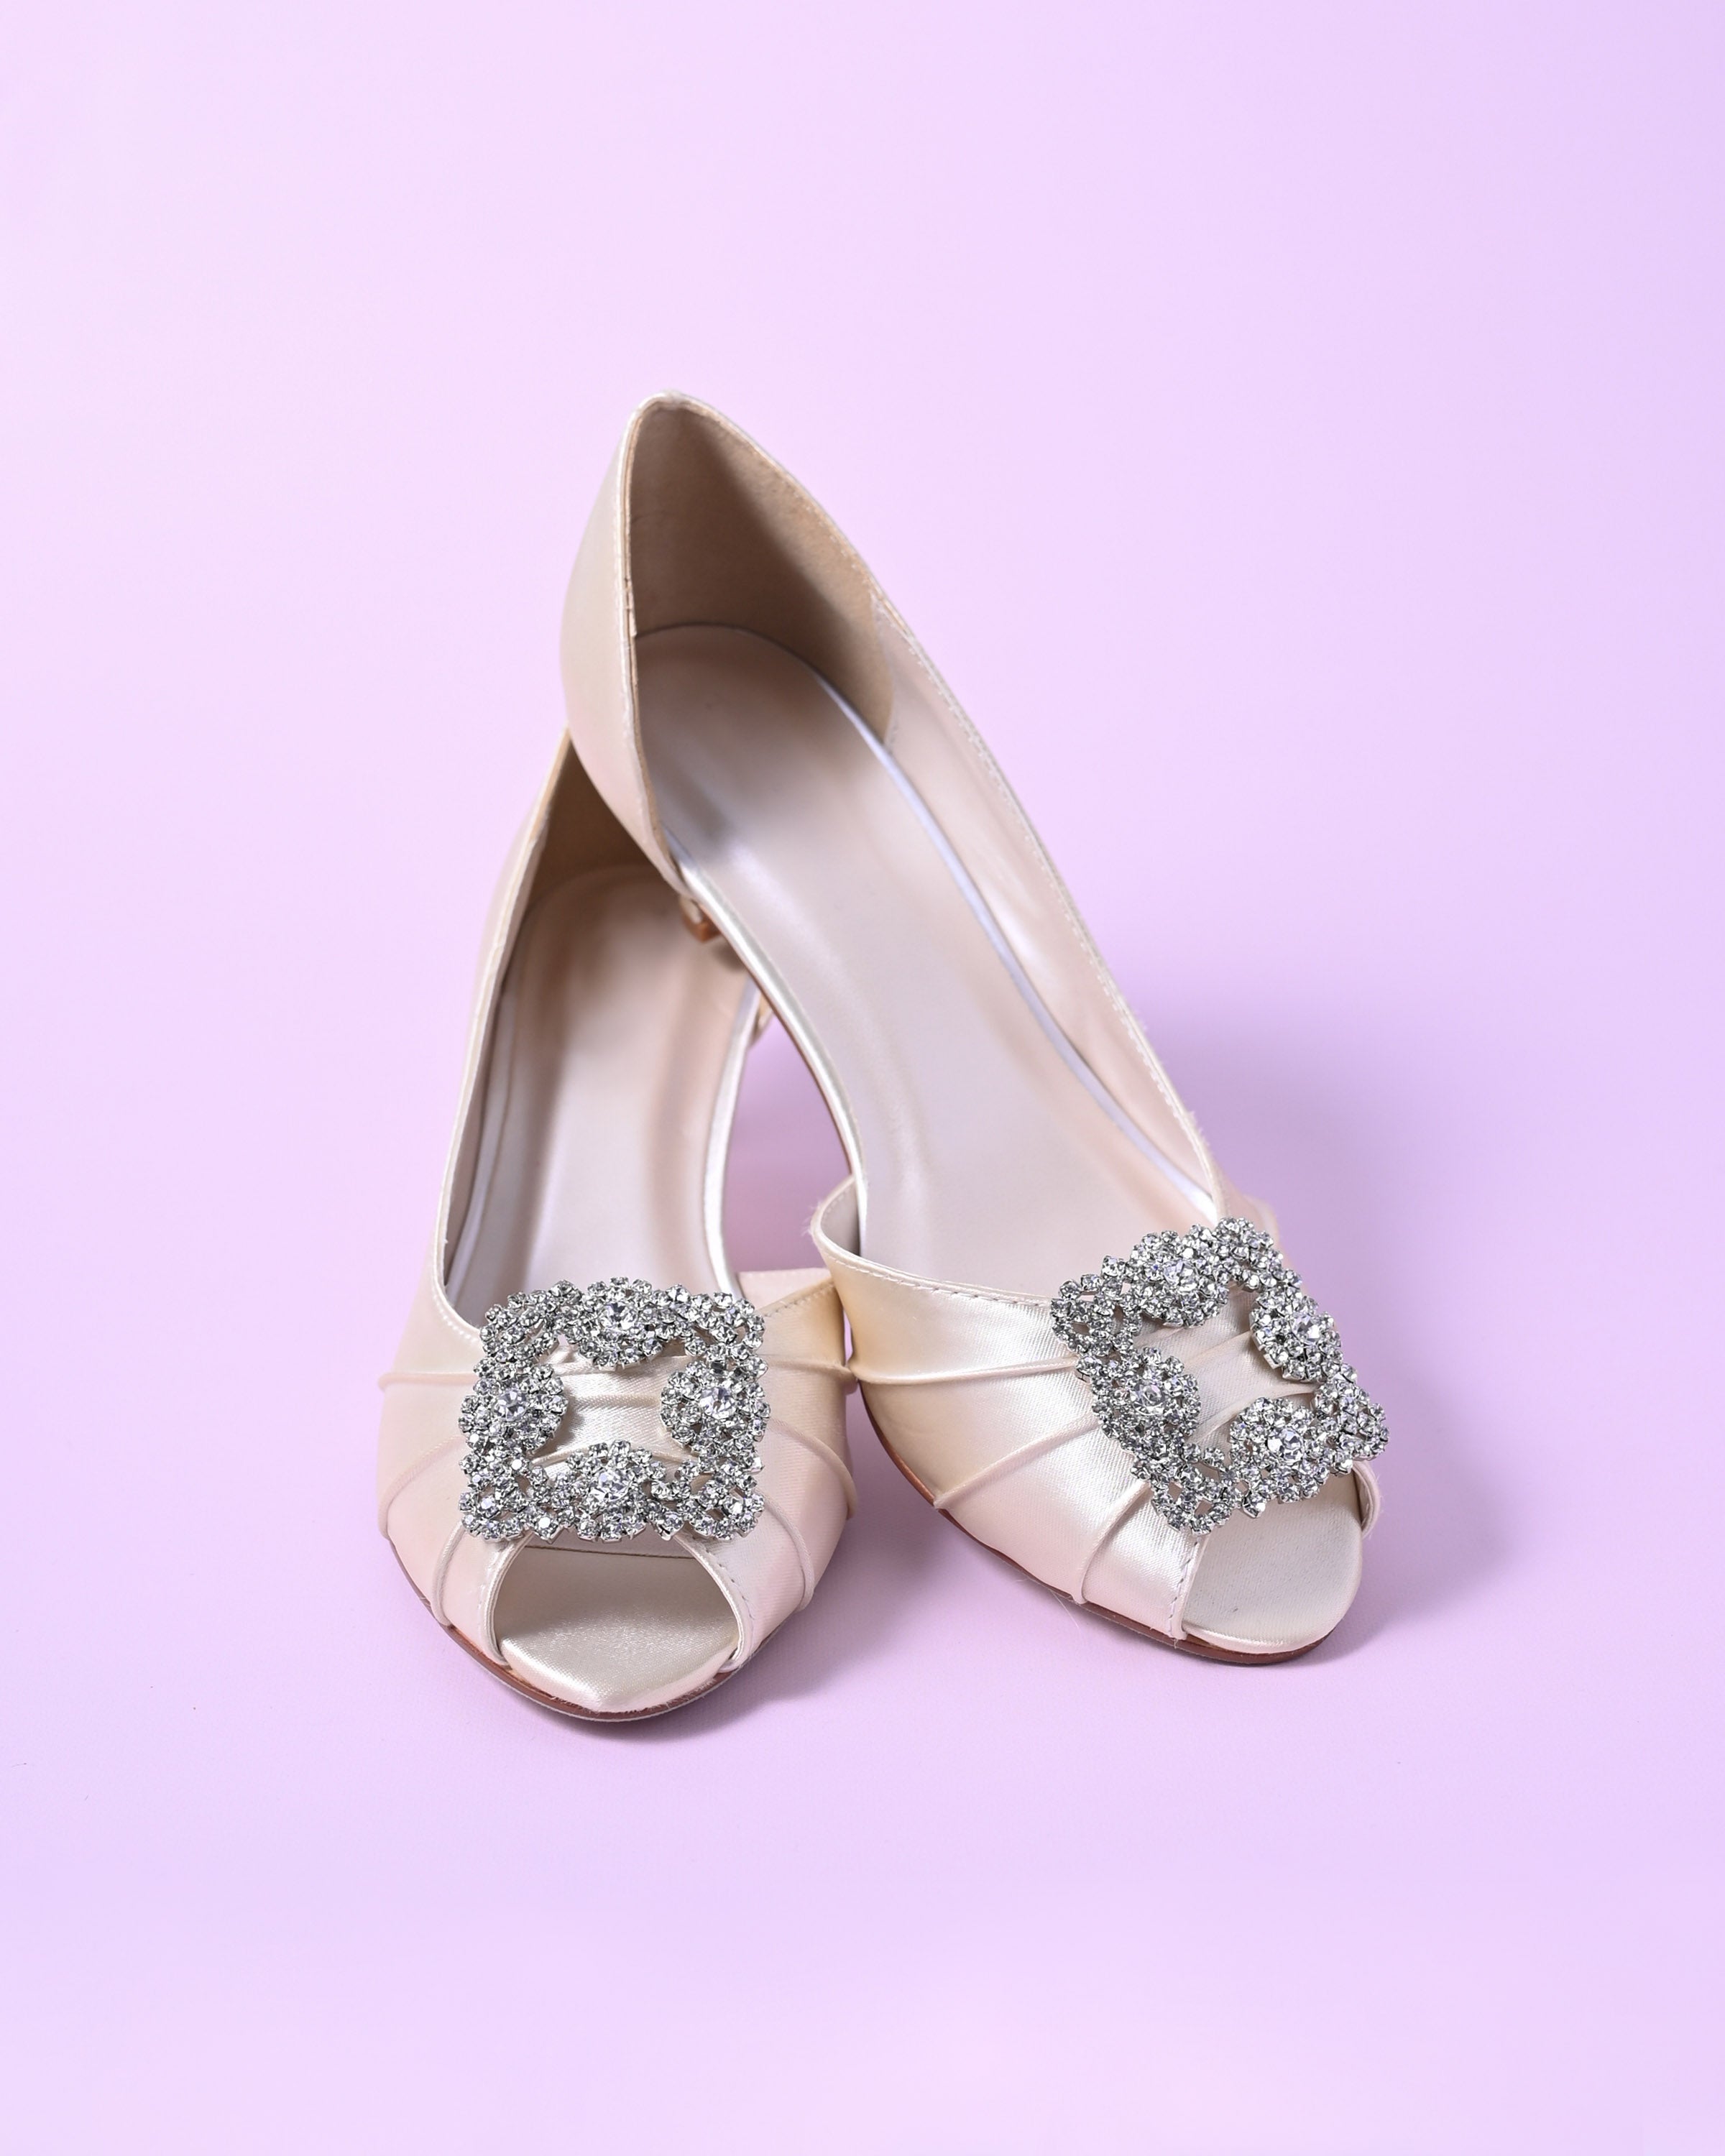 Ellie Wren Custom Wedding Shoes: Design Your Own Wedding Shoes